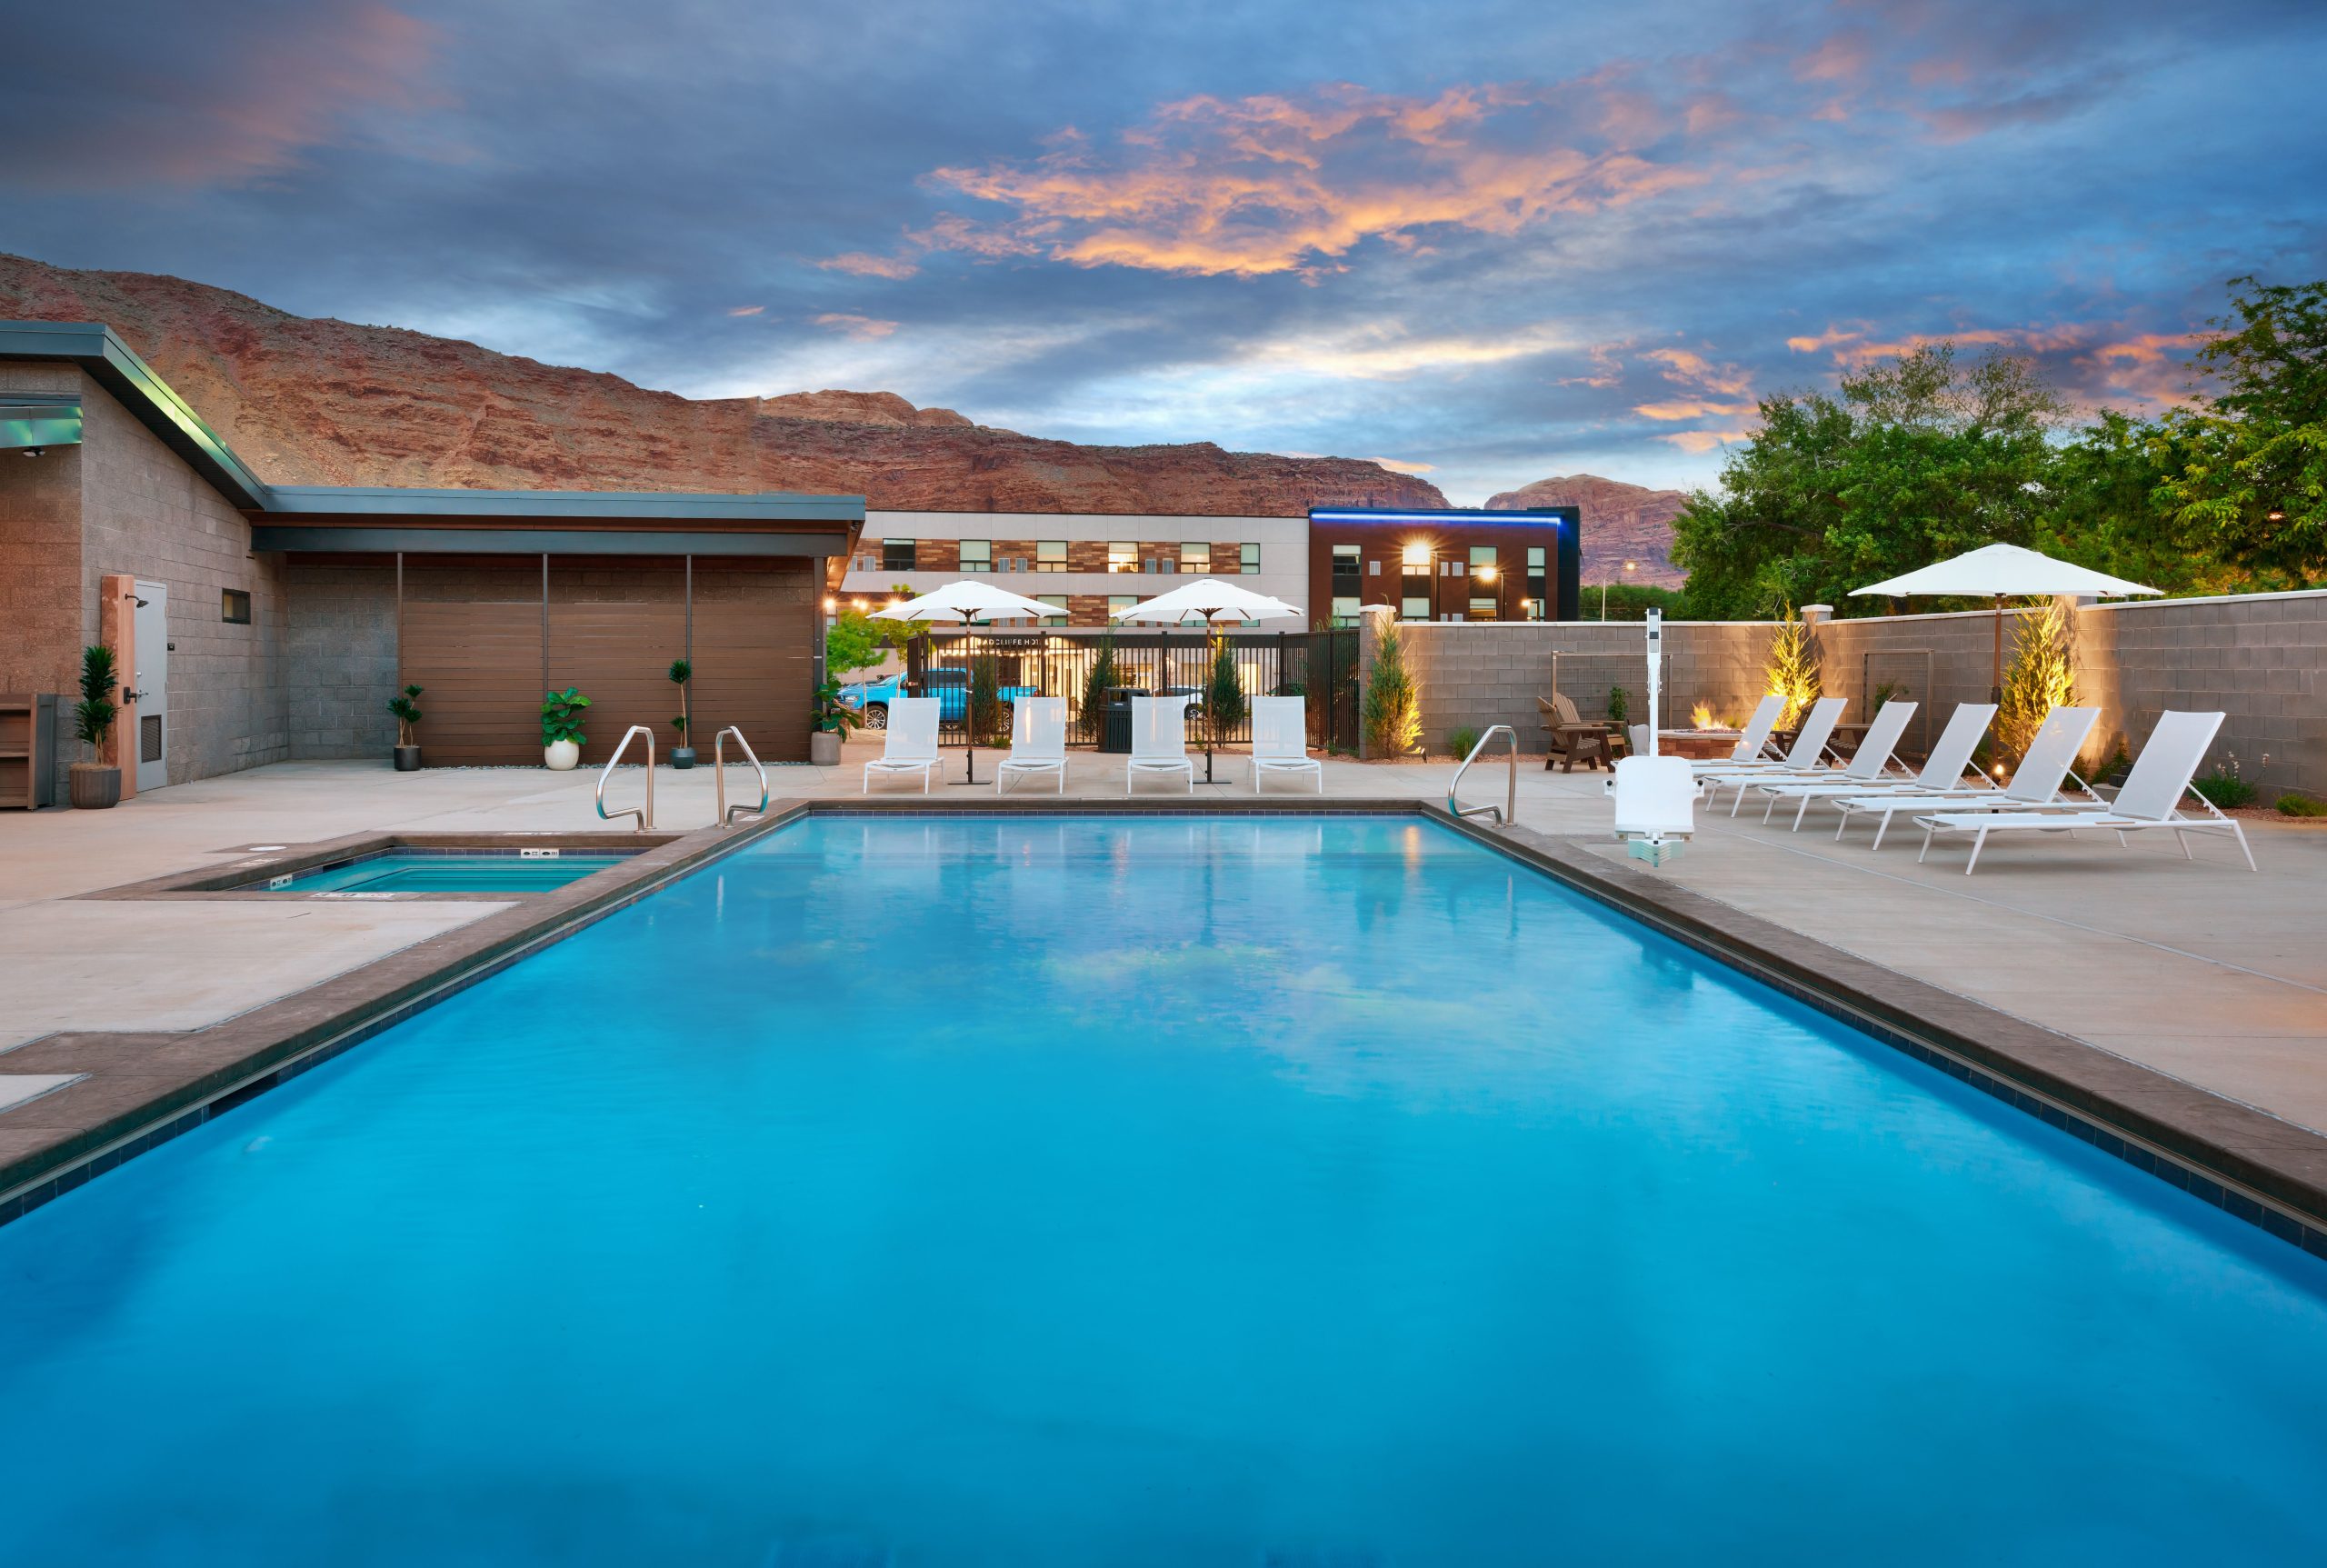 Swimming pool at Radcliffe Hotel in Moab, Utah